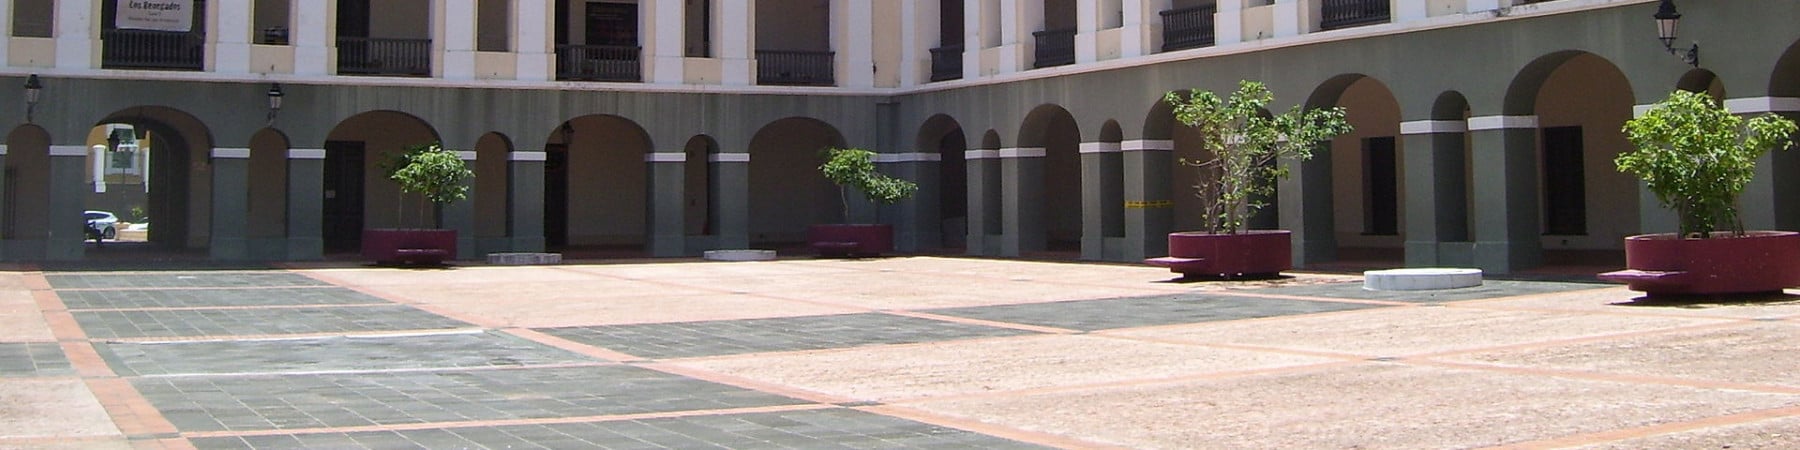 Academia Puertorriqueña de la Lengua (foto: Wikimedia Commons)